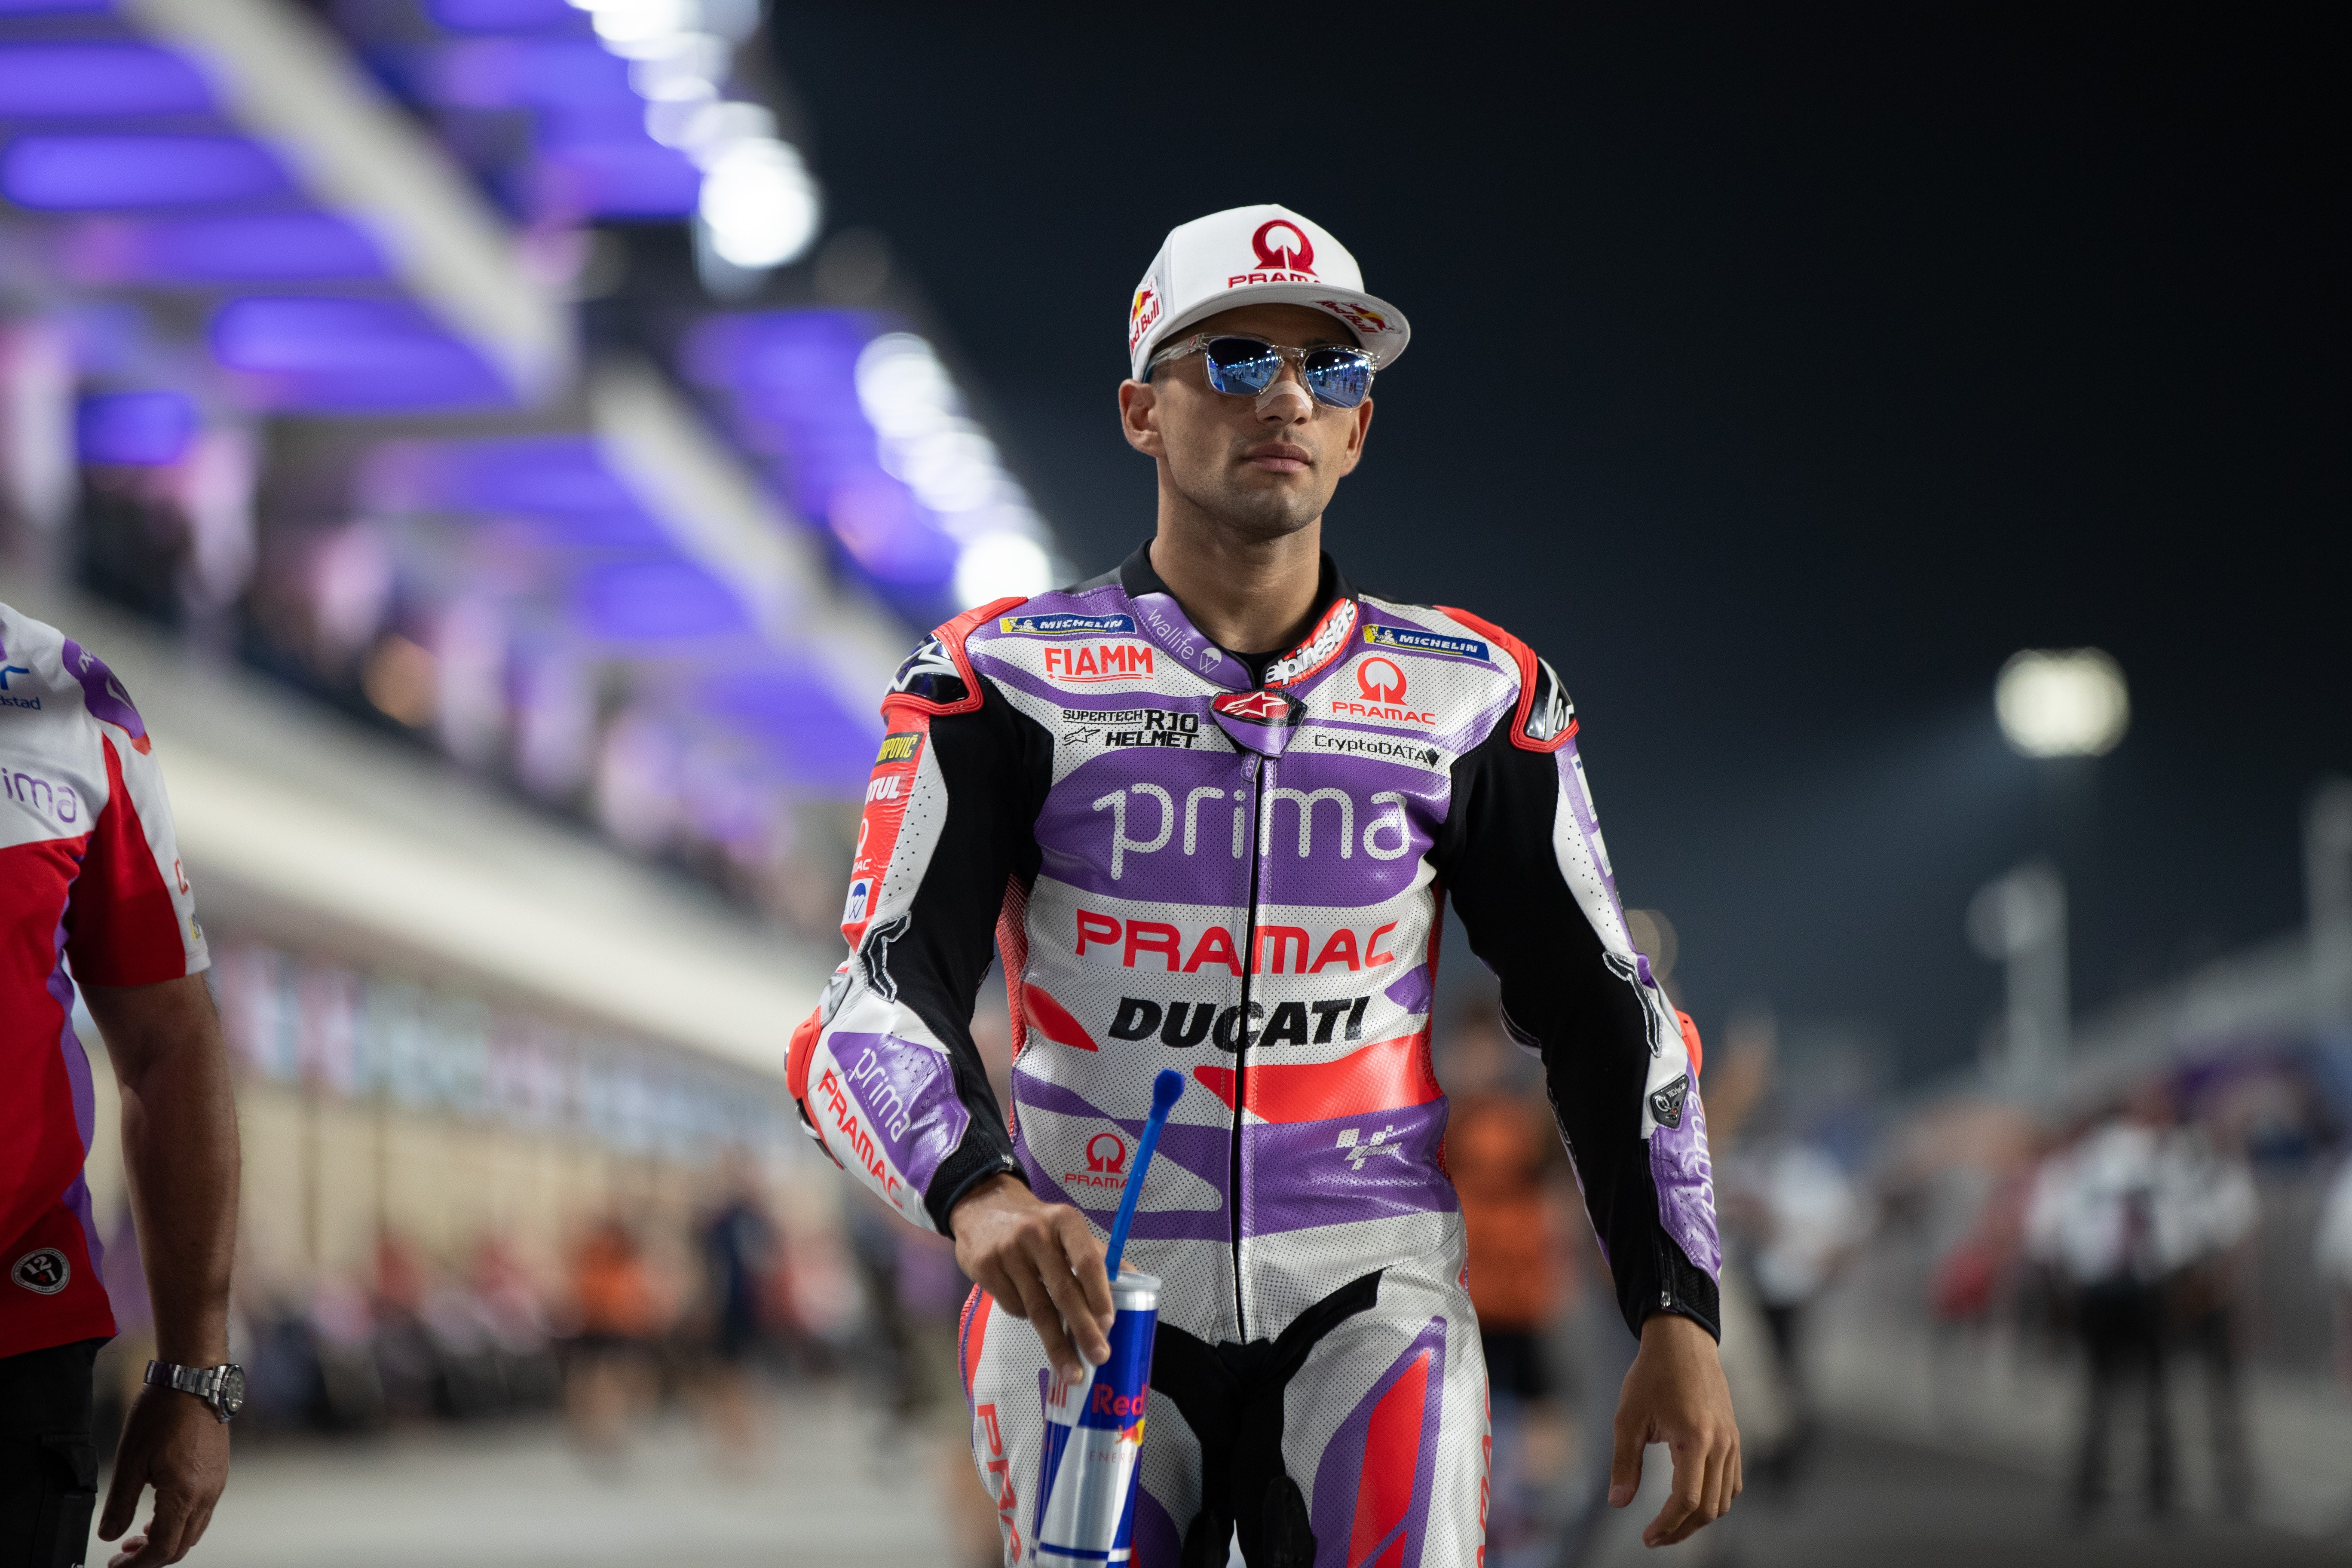 Jorge Martin, ultimátum a Ducati con oferta inmediata para dejar KO a Pramac